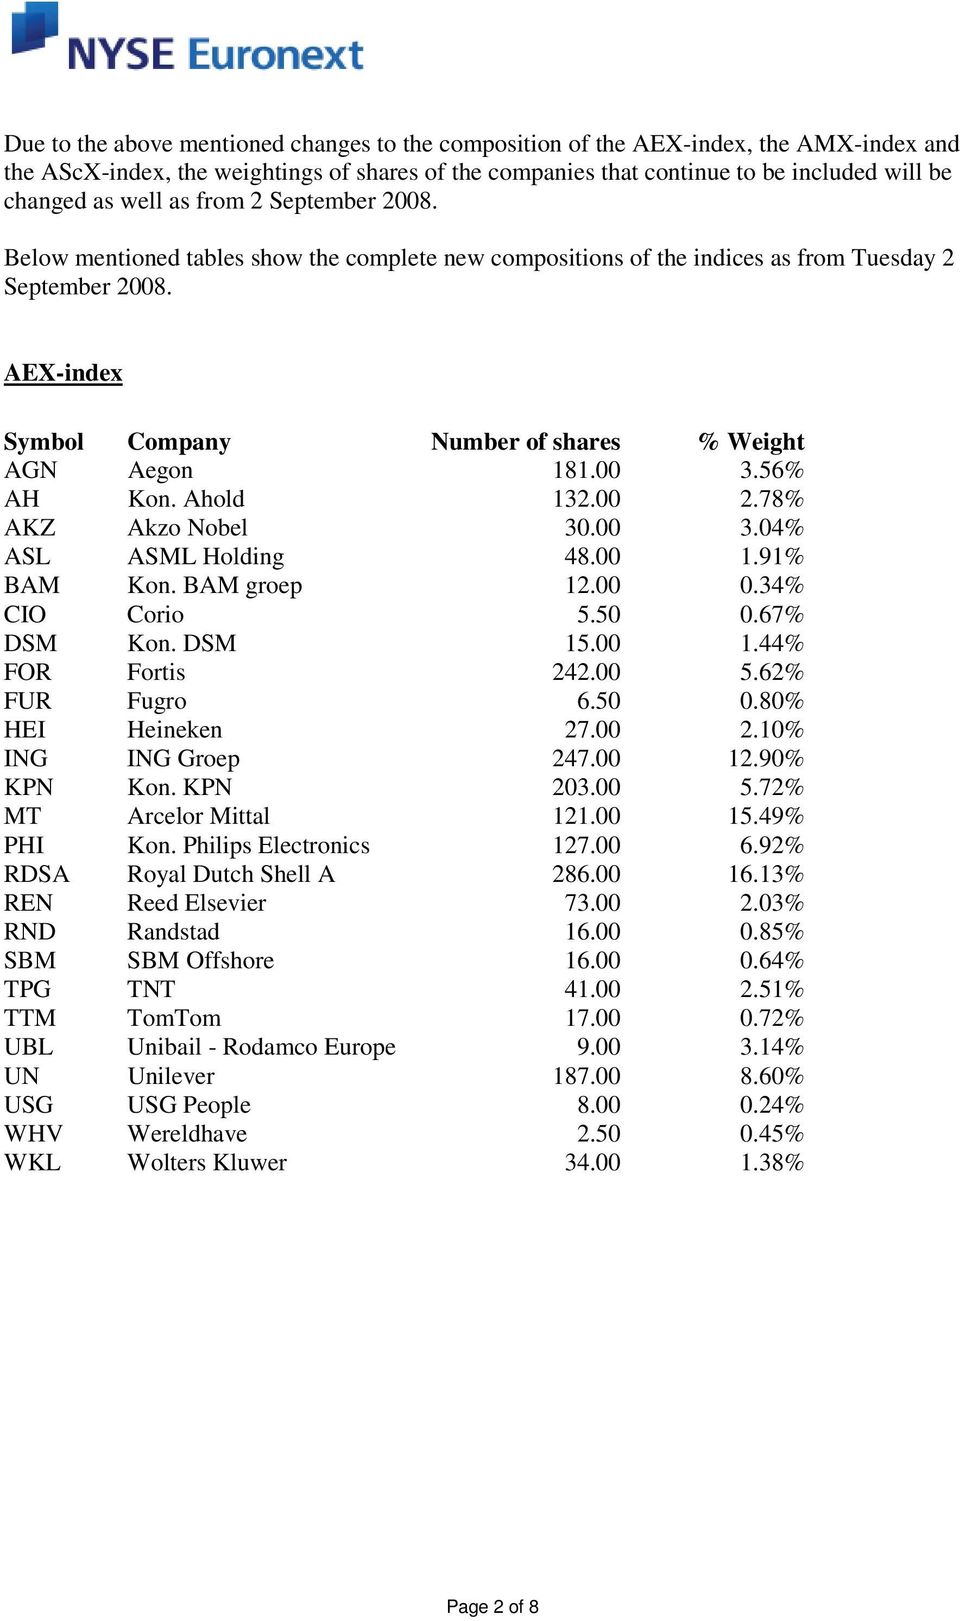 AEX-index Symbol Company Number of shares % Weight AGN Aegon 181.00 3.56% AH Kon. Ahold 132.00 2.78% AKZ Akzo Nobel 30.00 3.04% ASL ASML Holding 48.00 1.91% BAM Kon. BAM groep 12.00 0.34% CIO Corio 5.